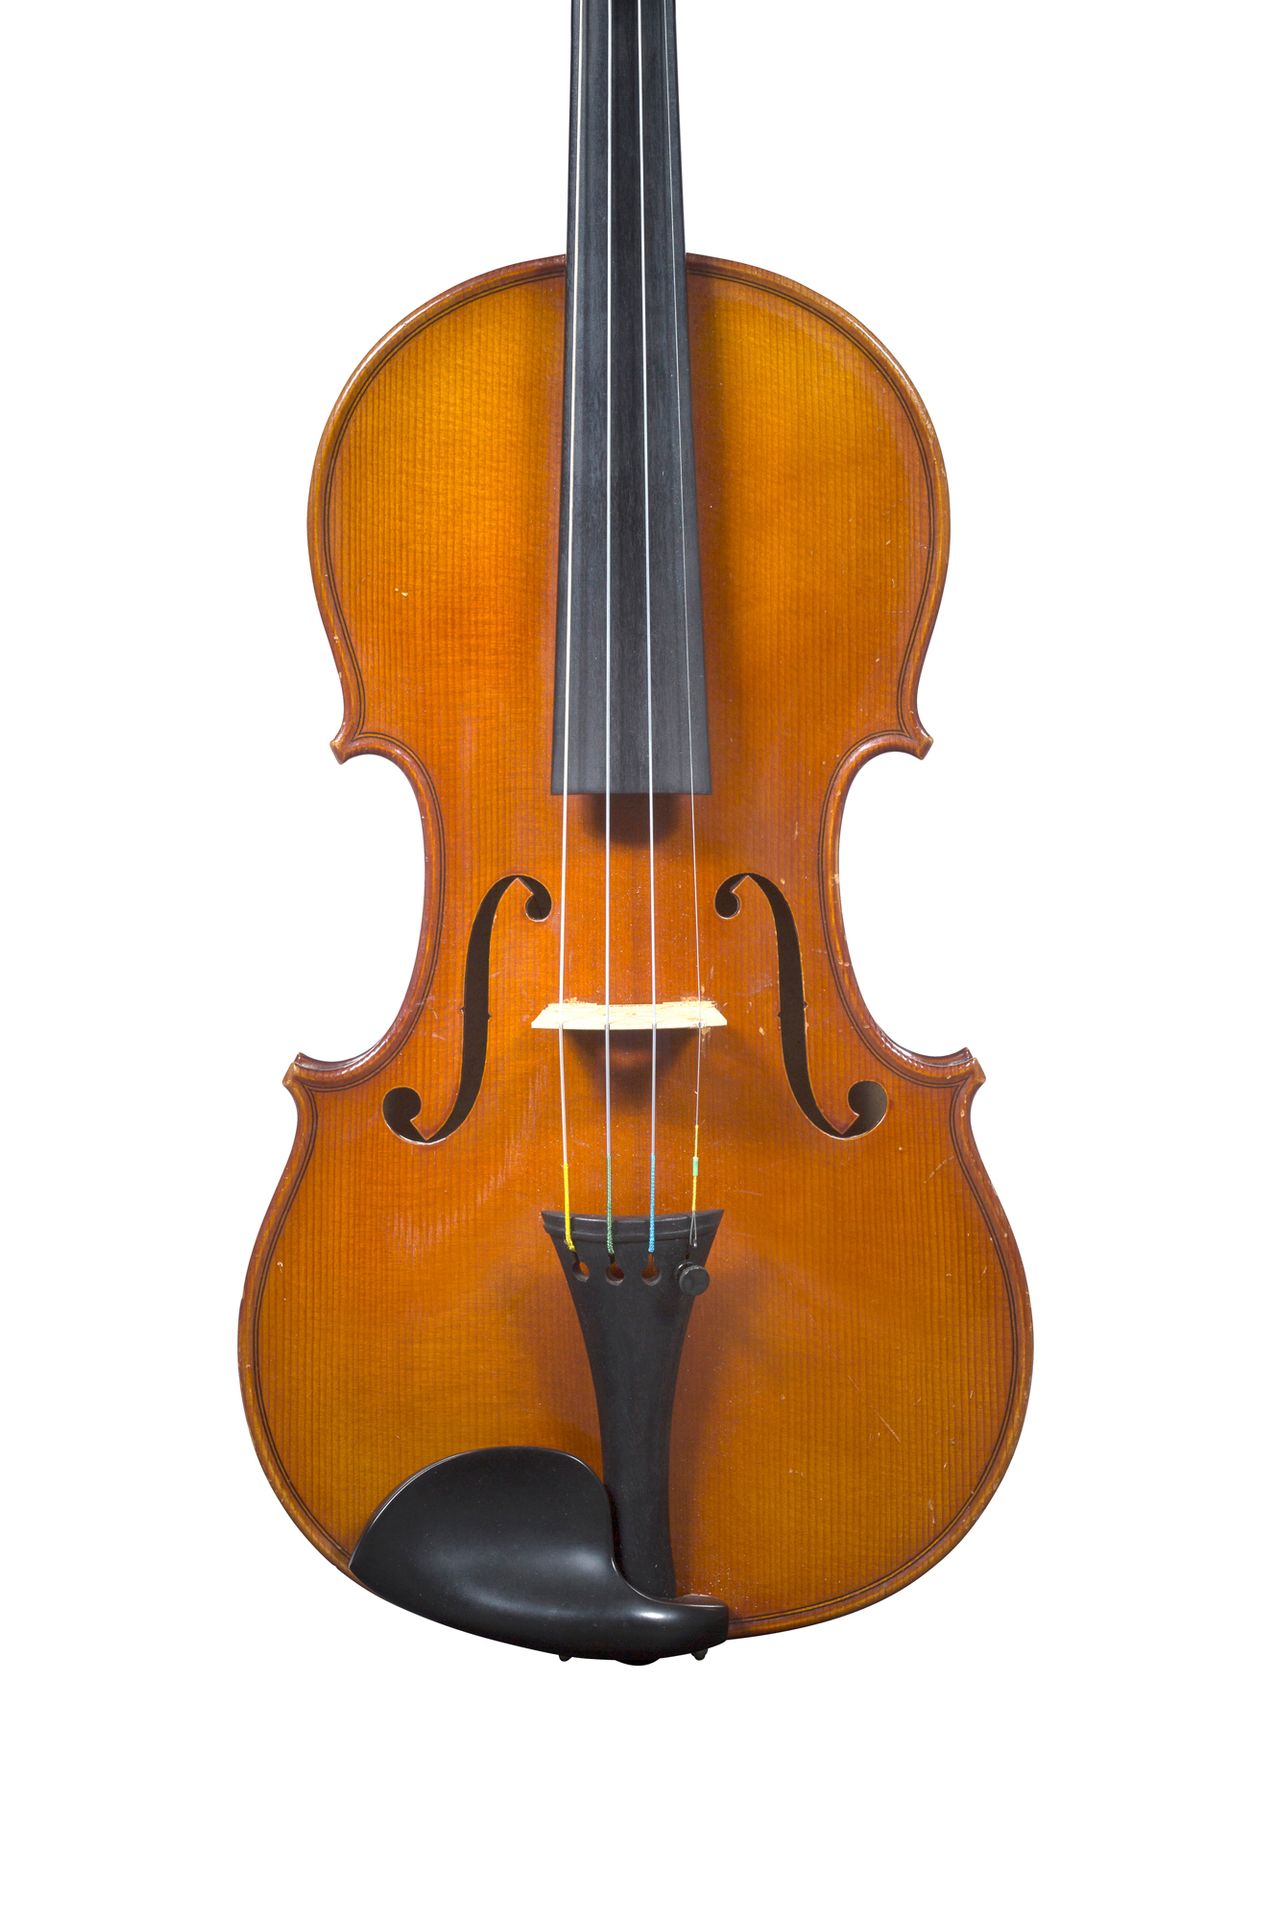 Null 古斯塔夫-维罗姆的小提琴
1927年在南锡制造
后脚跟下有标签和铁印
状况良好
随时可以演奏 
背面有358毫米
附有一个镍银材质的研究弓，原样。